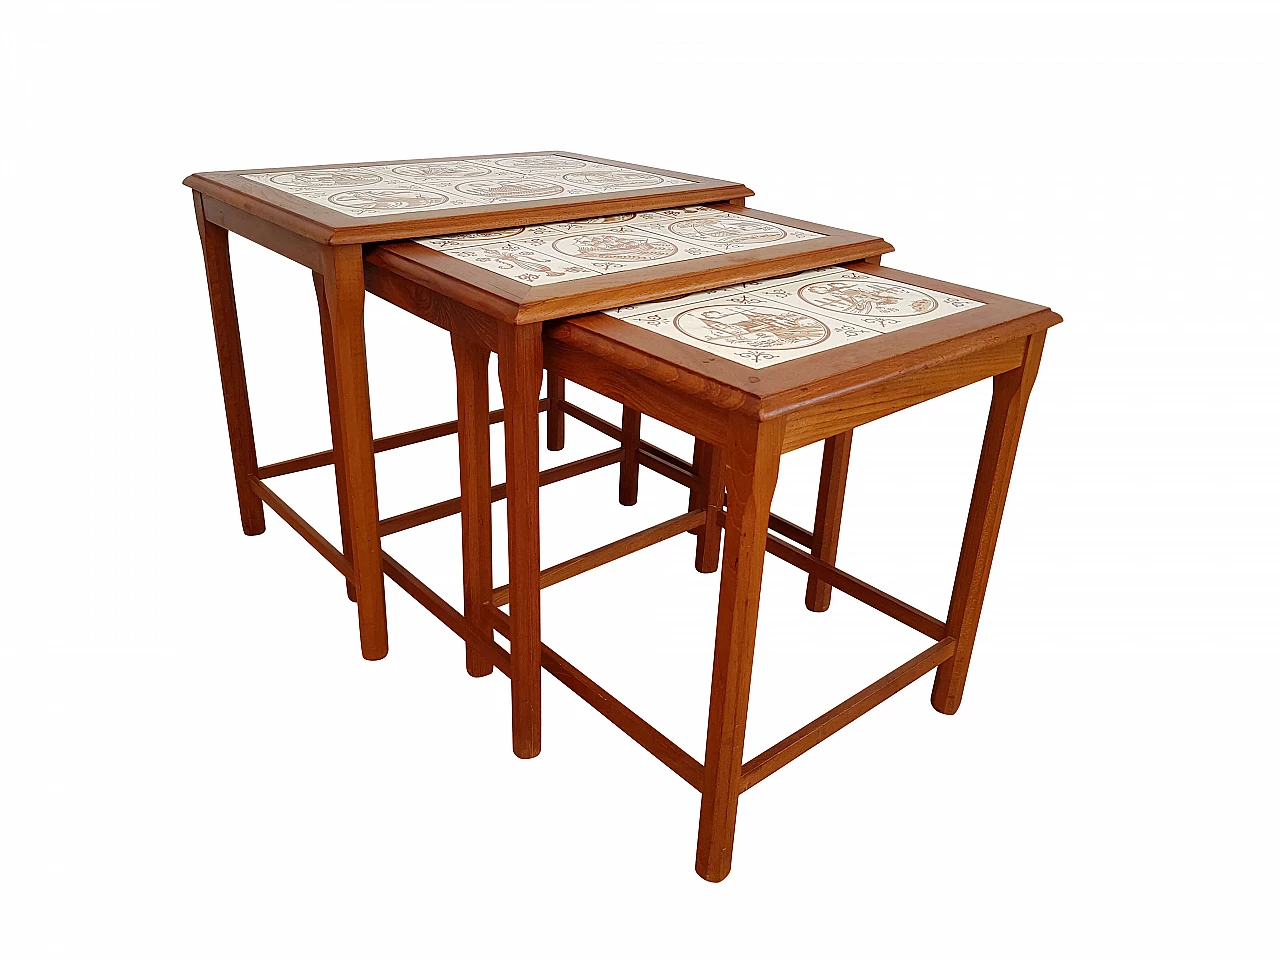 Nesting table, 60s, danish design, hand-painted ceramic tiles, teak wood 1065320